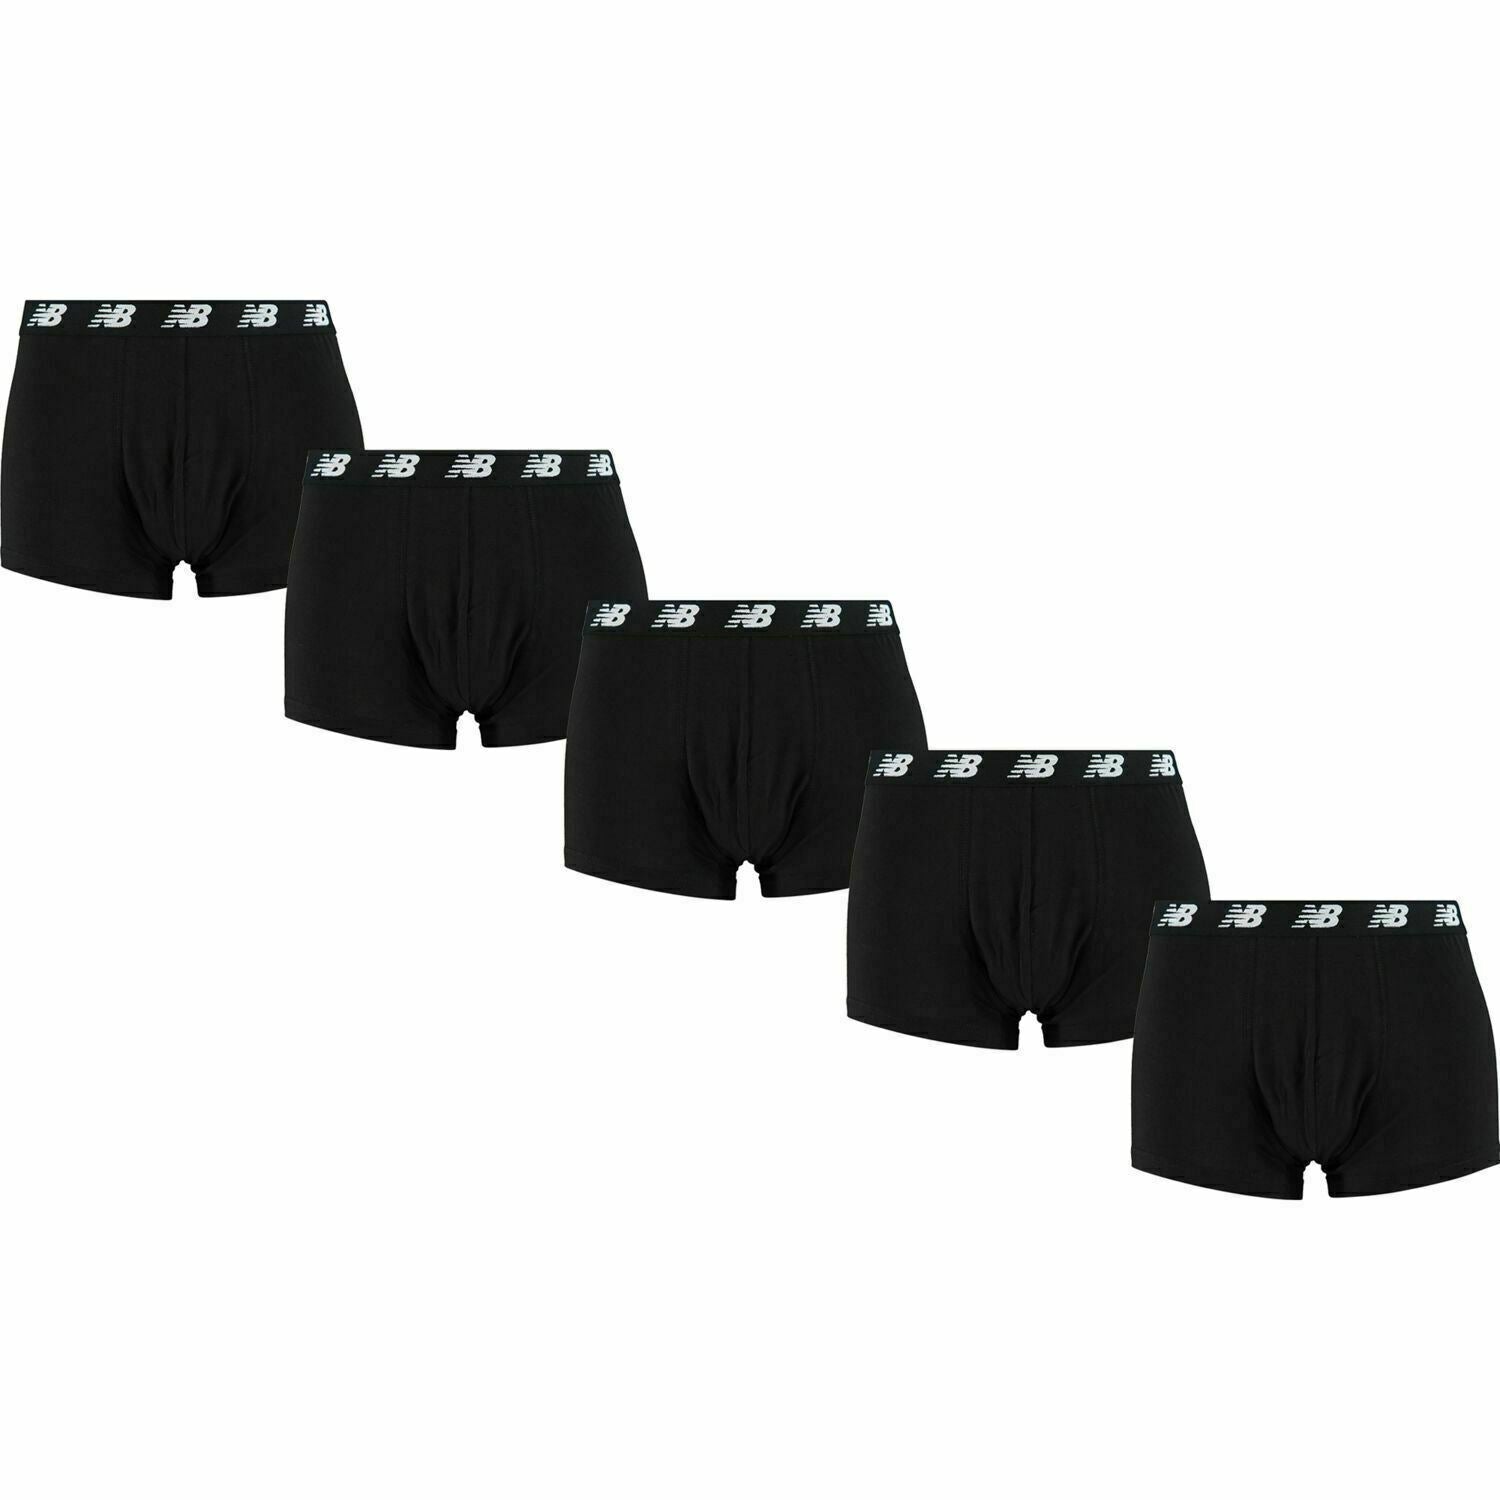 NEW BALANCE Underwear: Men's 5-Pack Velocity Cotton Boxers Trunks, Bla